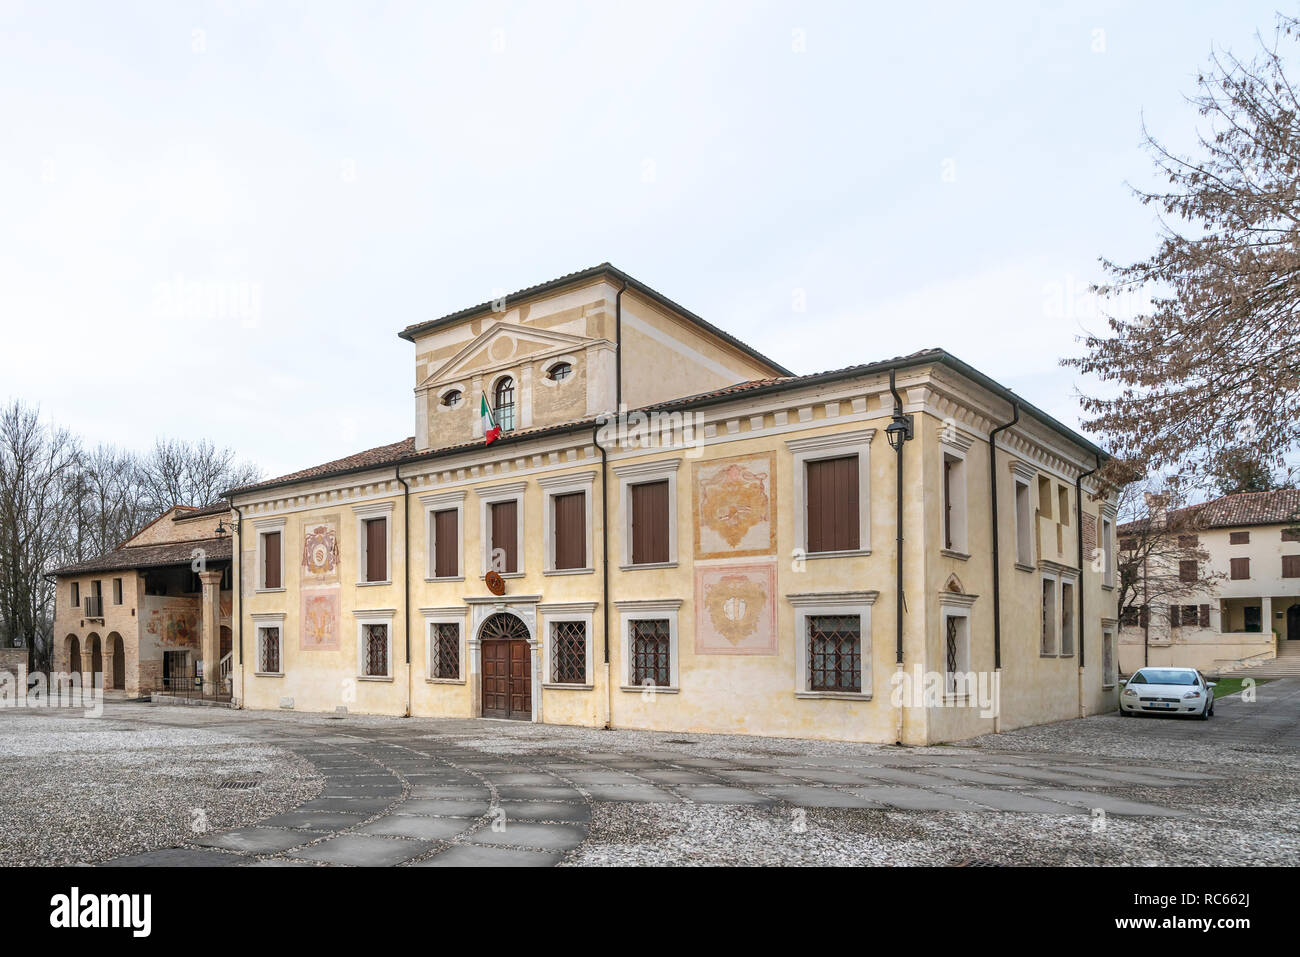 the seat of the town hall in the courtyard of the medieval abbey of Sesto al Reghena, Friuli Venezia Giulia region, Italy Stock Photo